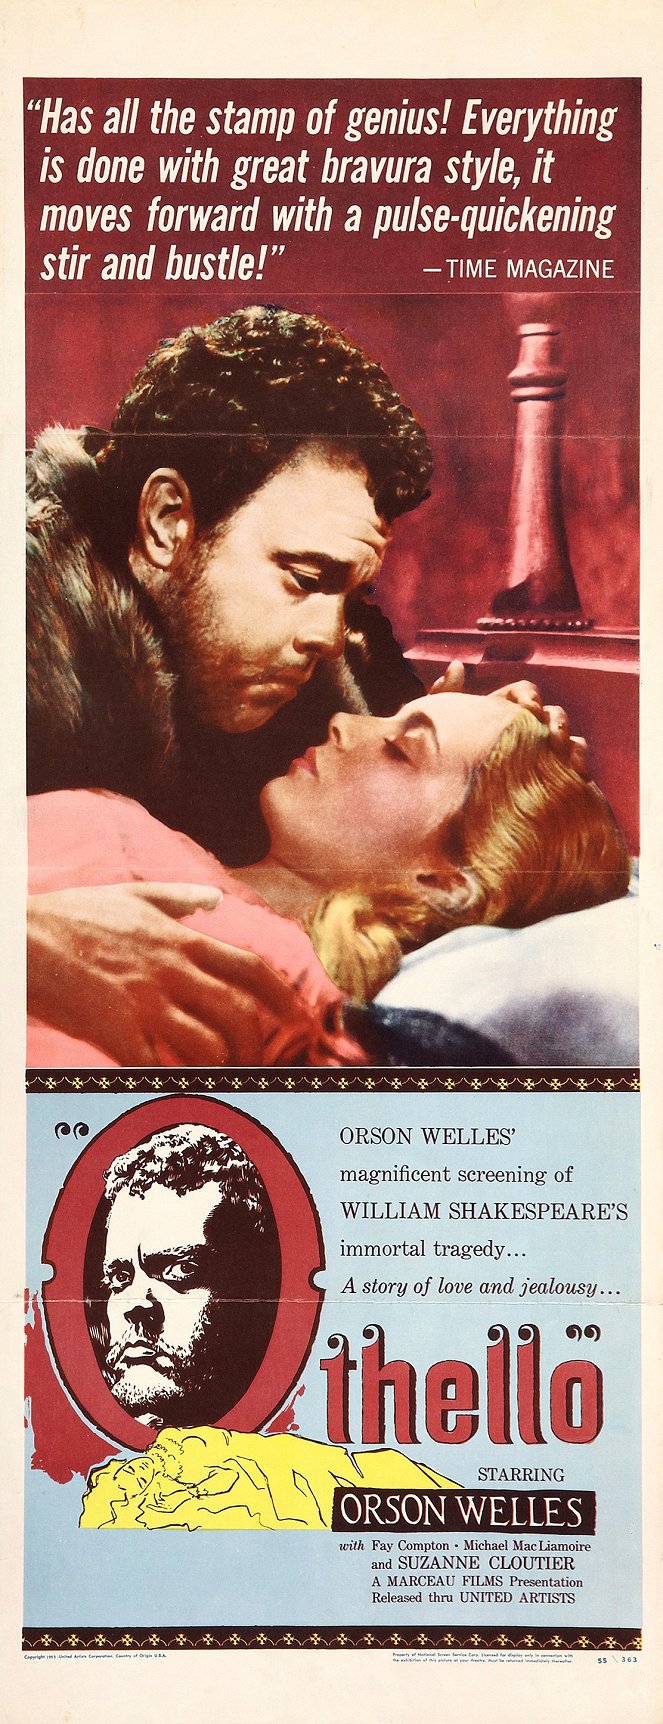 Othello - Posters